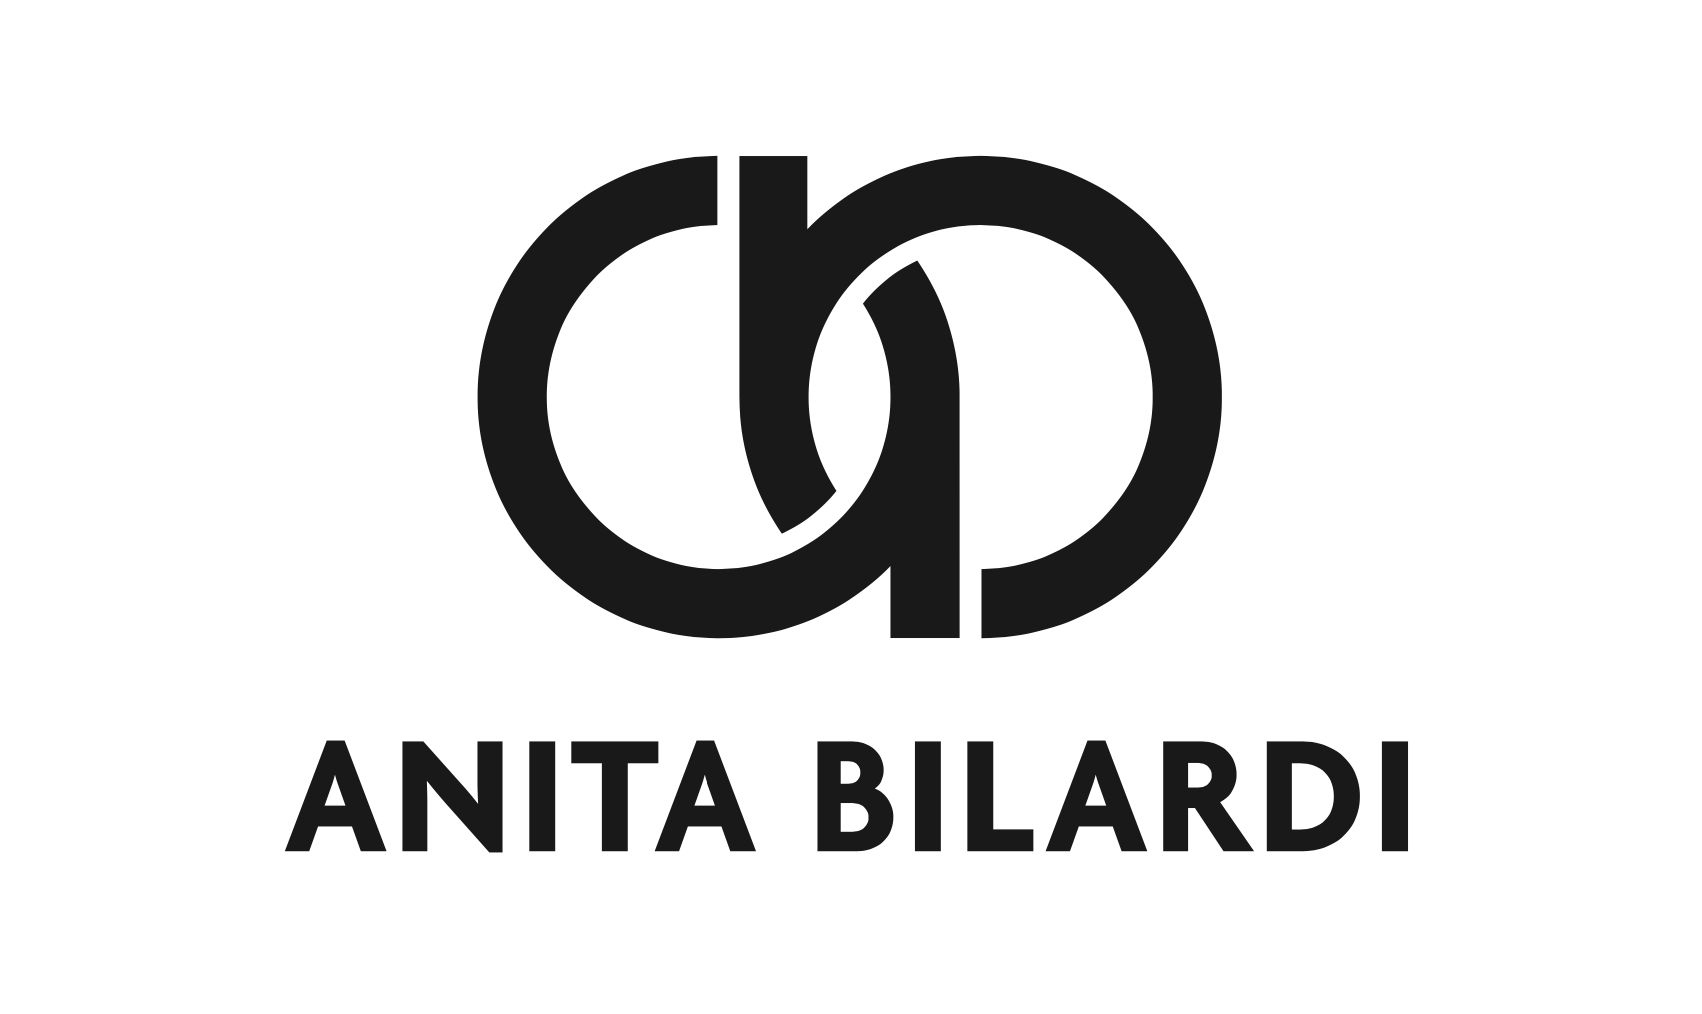 Anita Bilardi logo